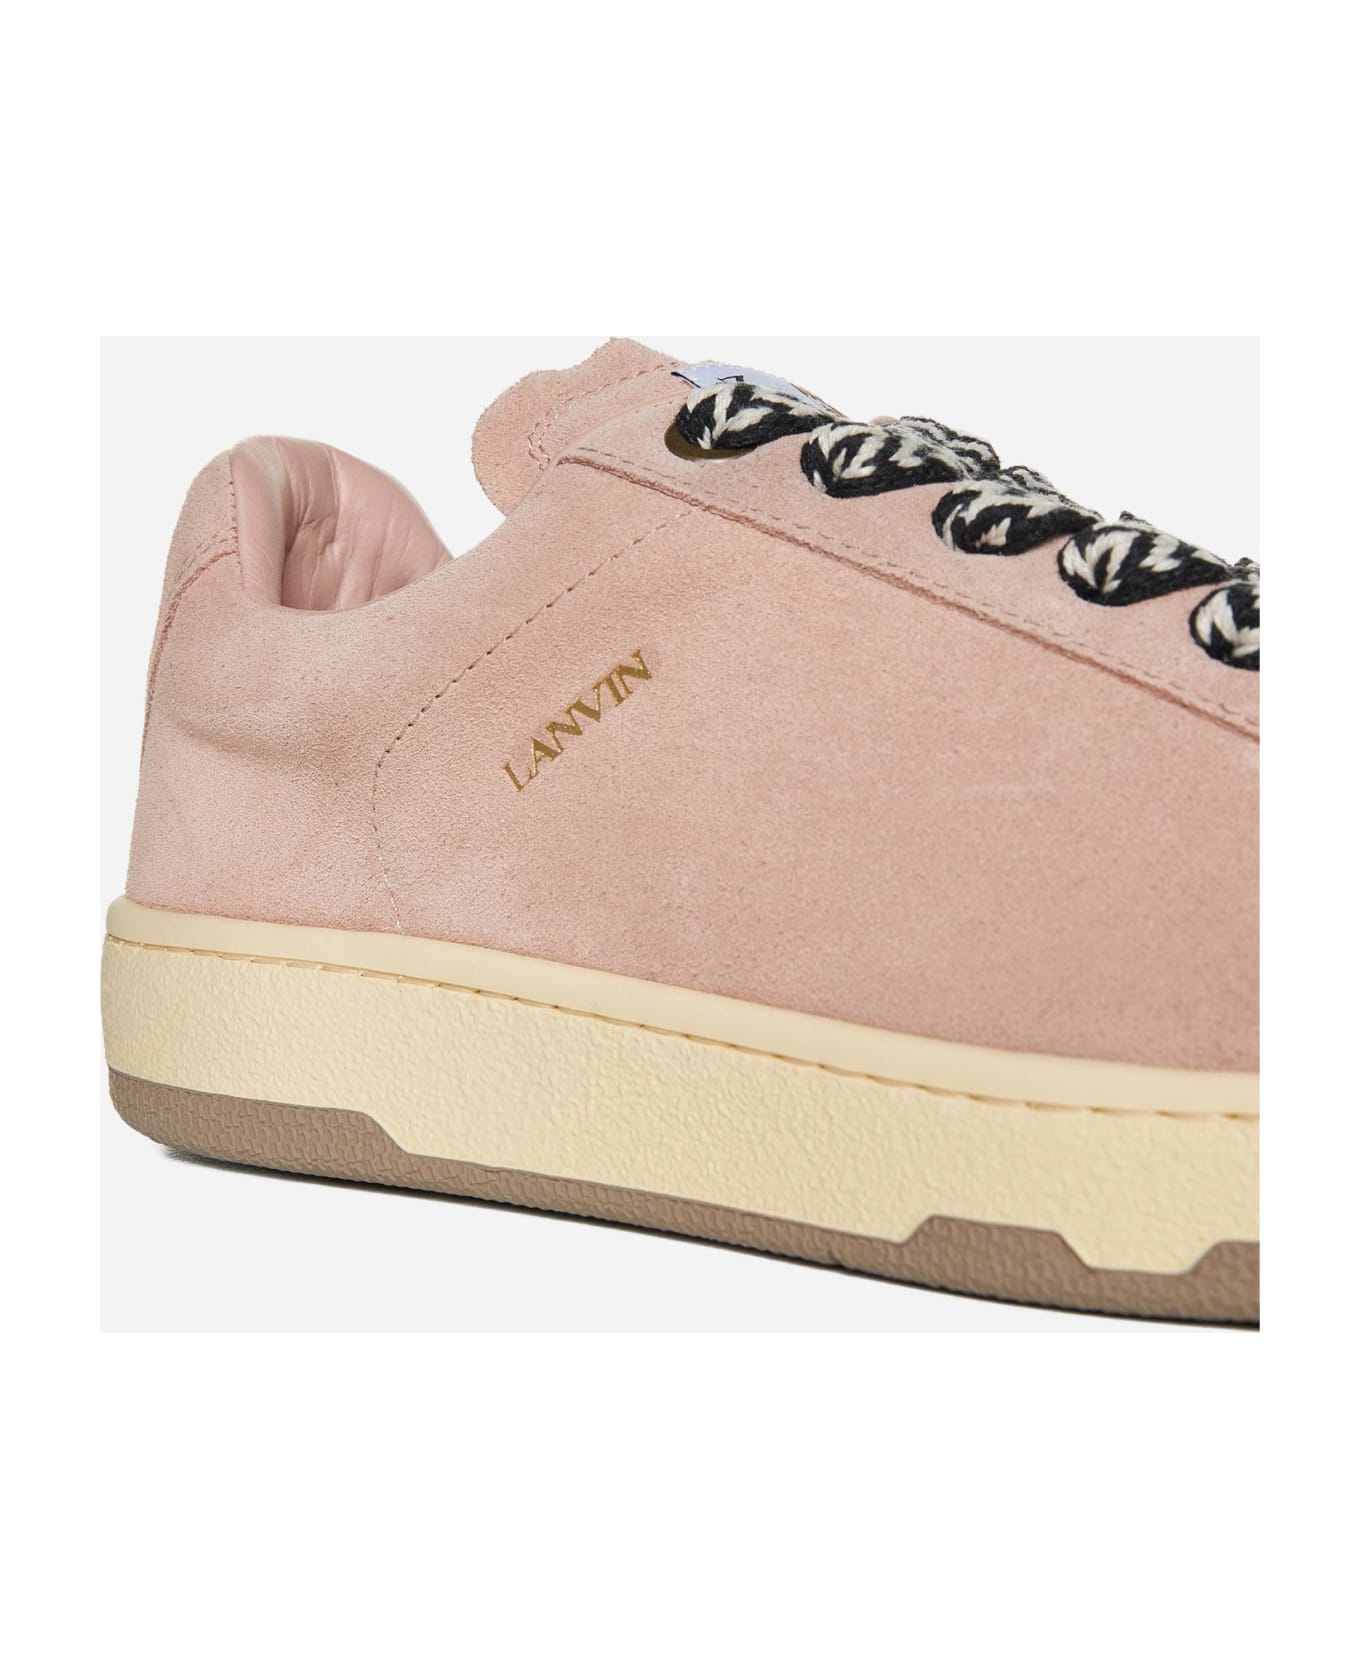 Lanvin Lite Curb Low-top Suede Sneakers - Pale Pink スニーカー